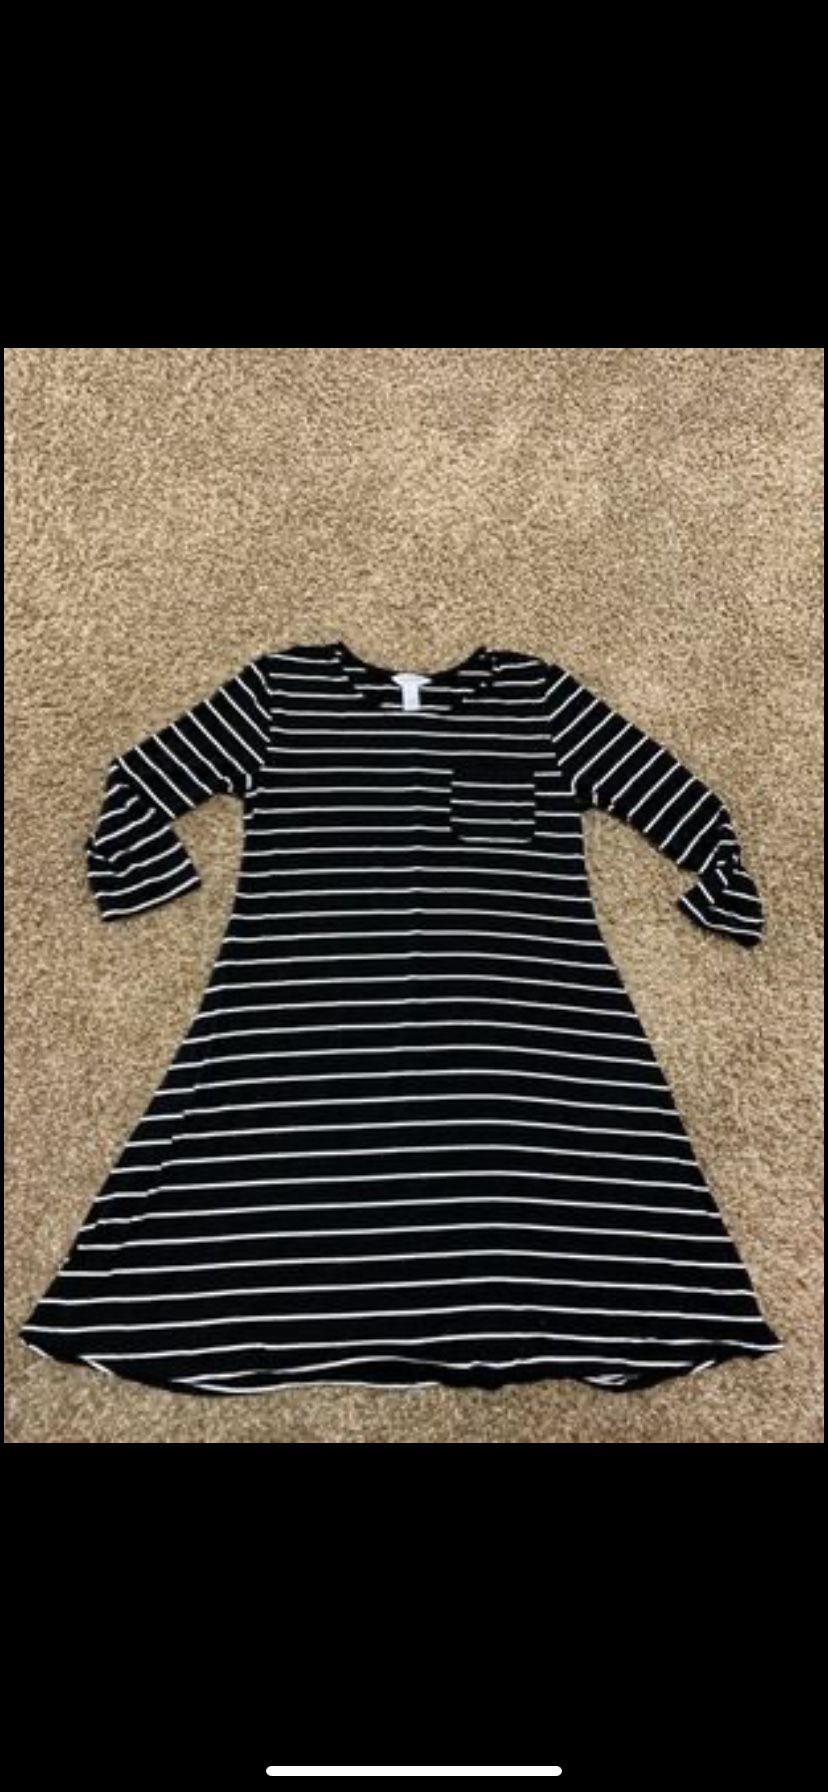 black striped dress size medium or 8/10